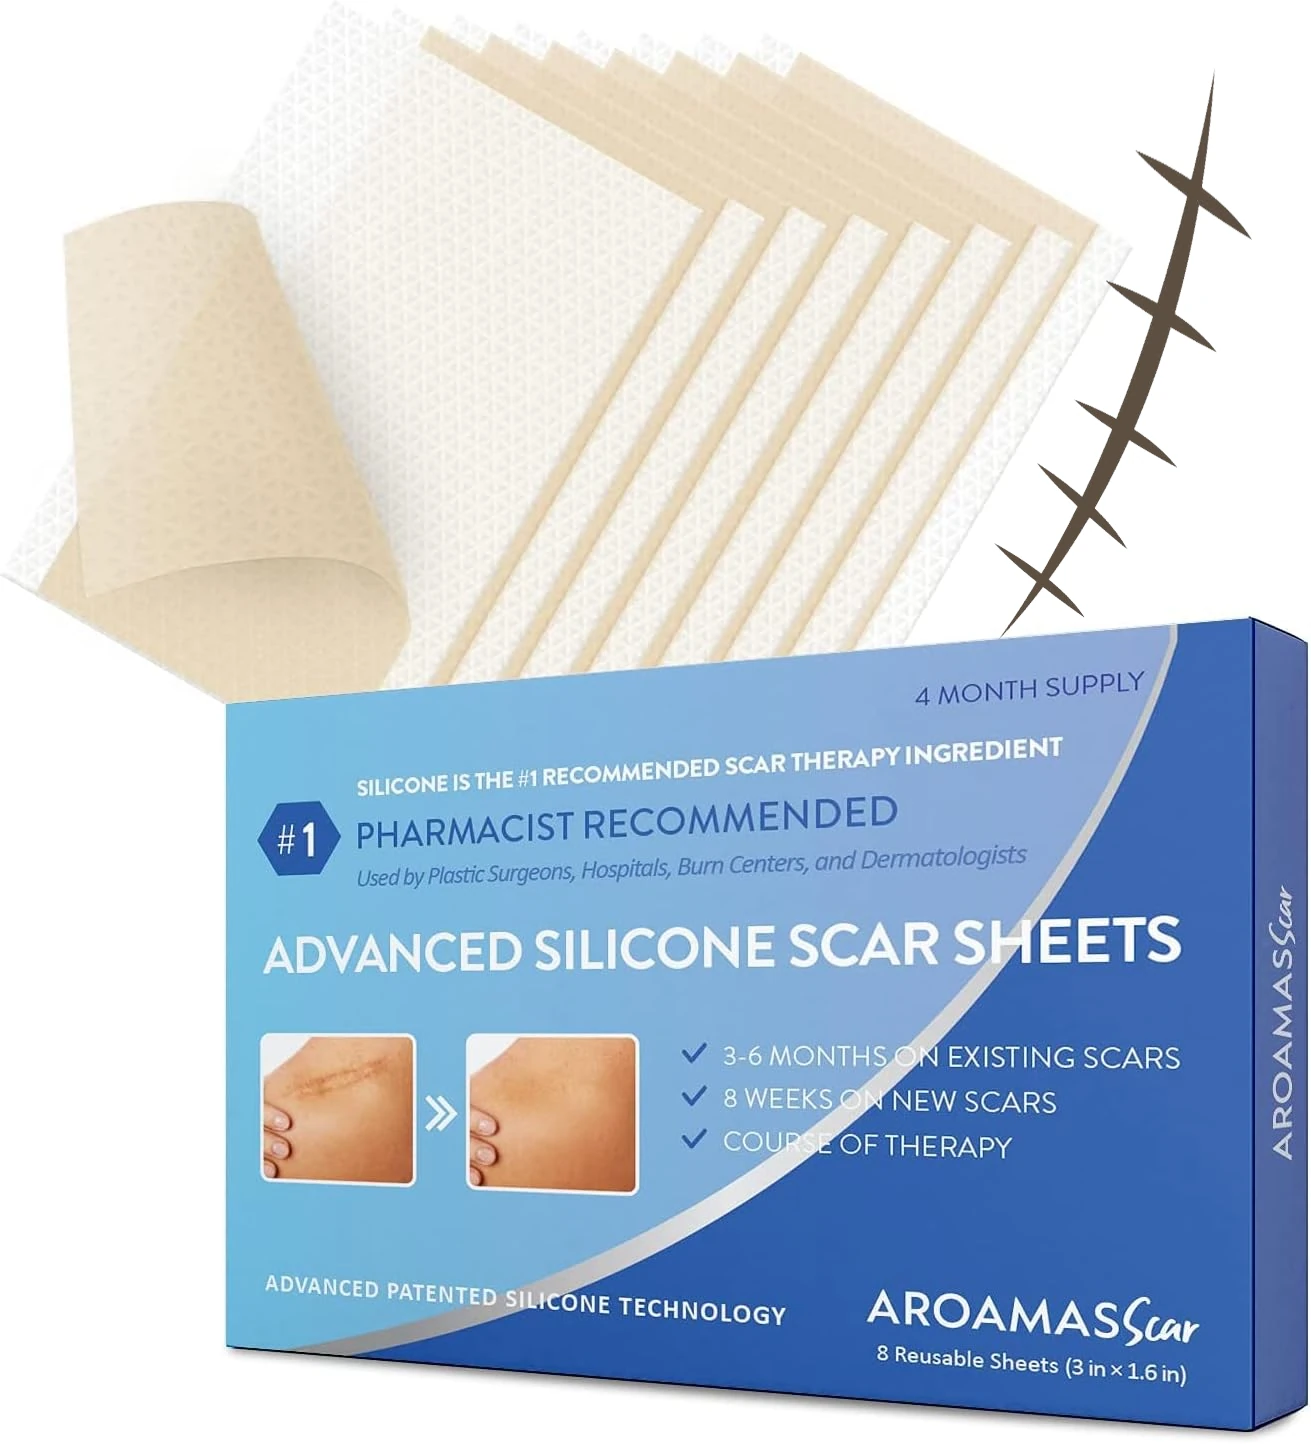 Aroamas Scar Professional Soft Silicone Scar Sheets Strips, 8 Sheets